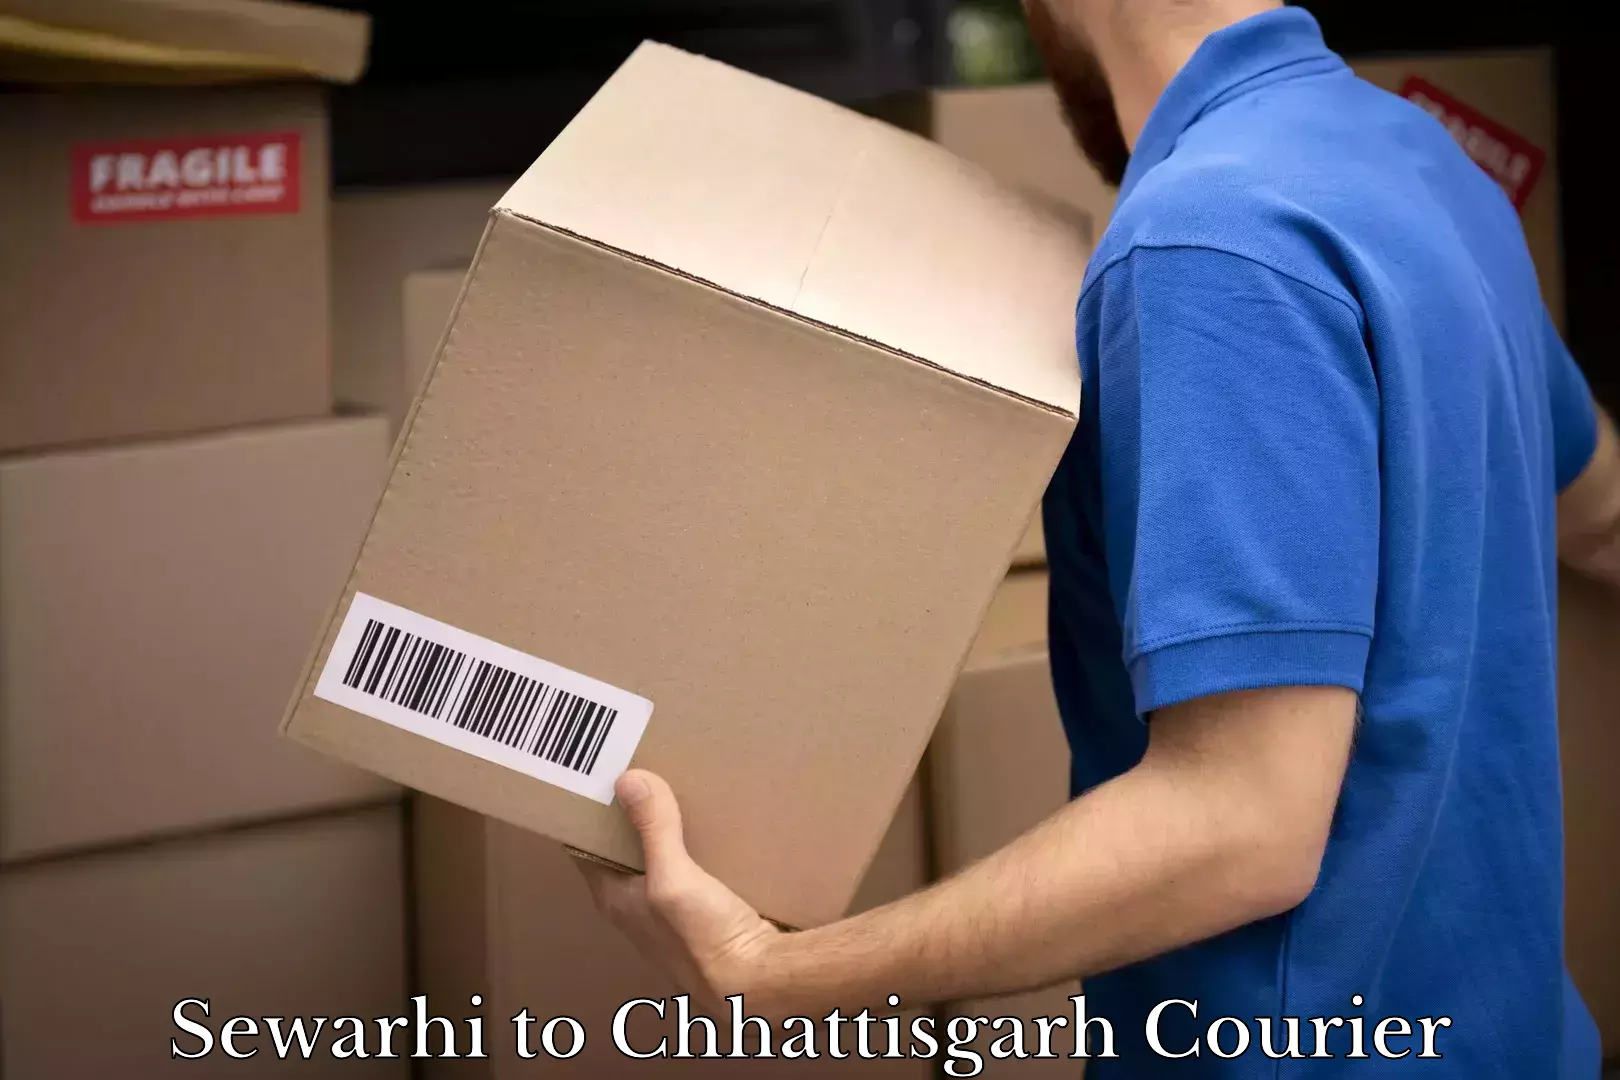 Advanced courier platforms Sewarhi to Chhattisgarh